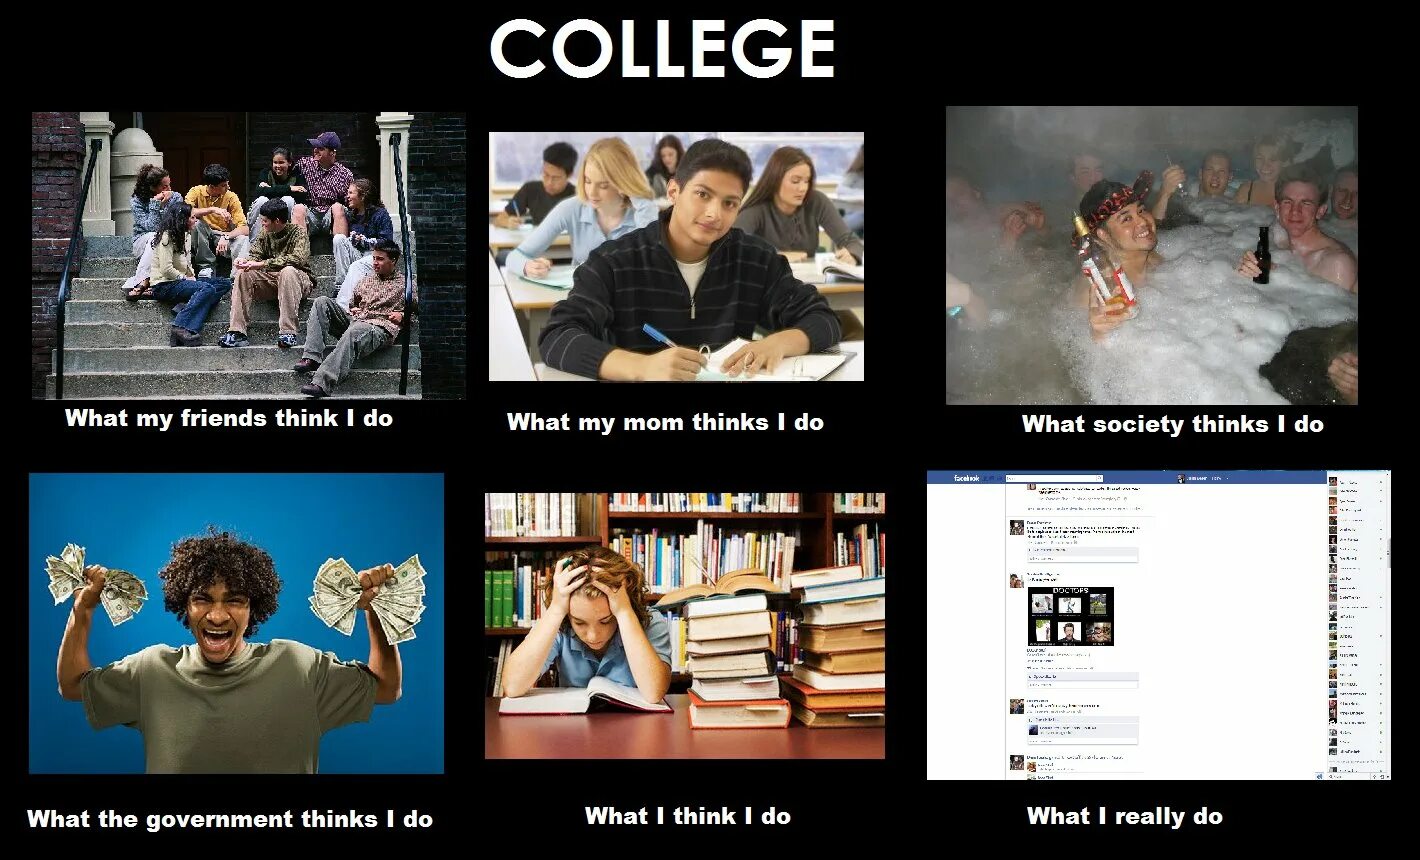 My friend thinks that. College memes. Студенческая жизнь приколы. Мемы про колледж. MAFS Мем.